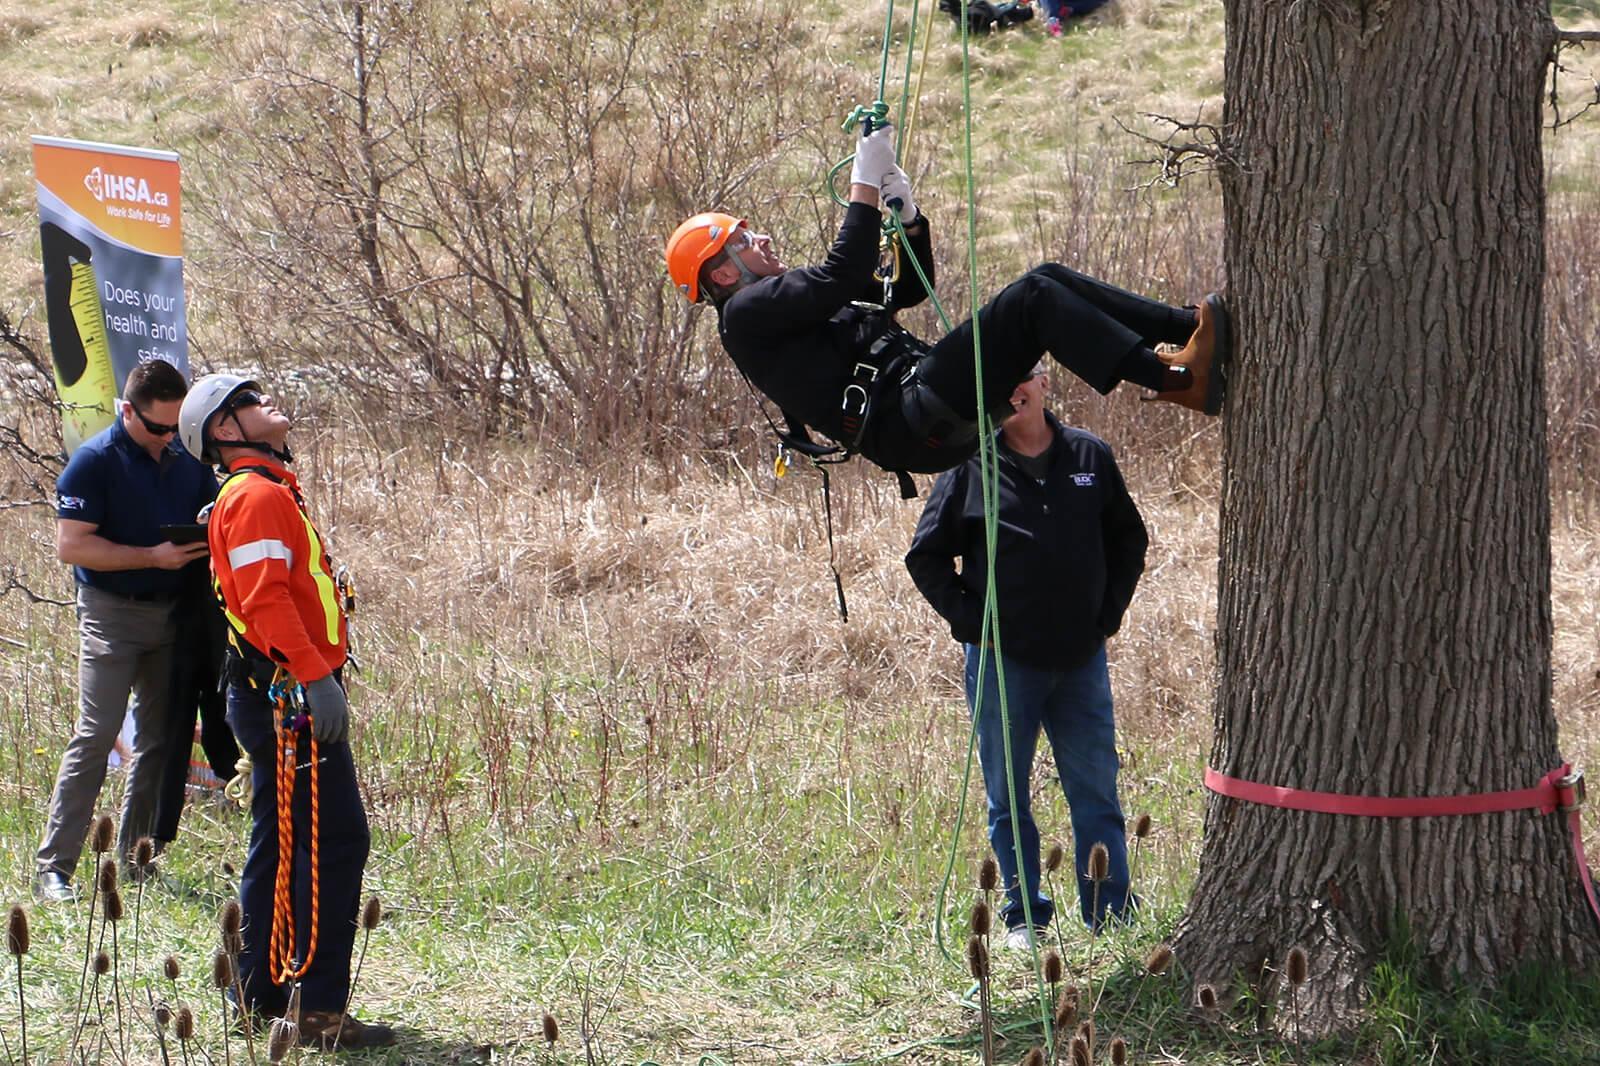 29th Annual Tree Climbing Championship - Landscape Ontario